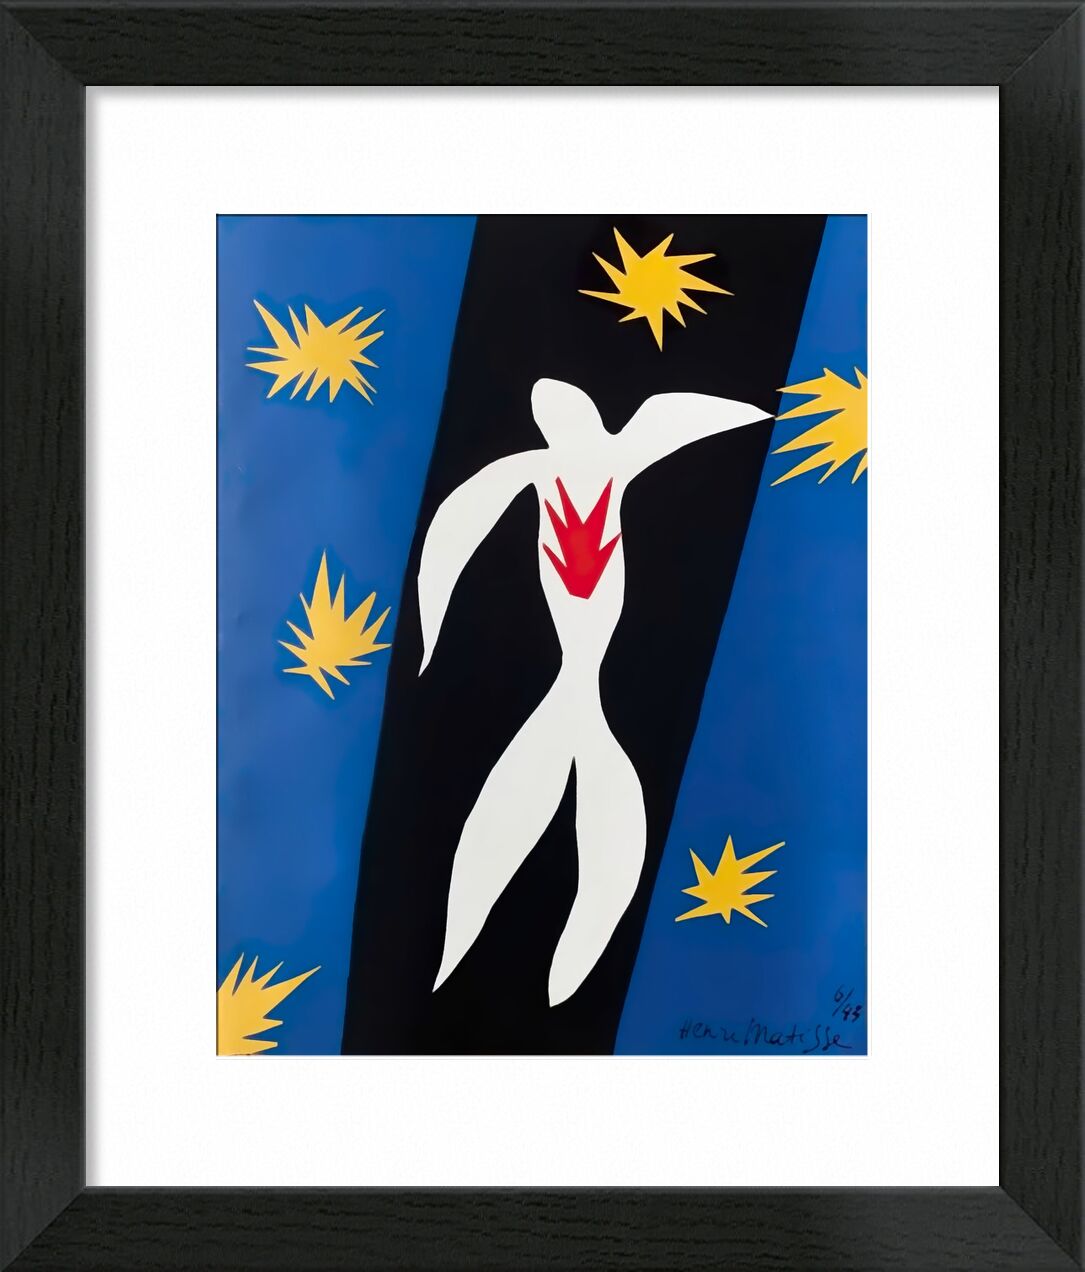 Fall of Icarus - Henri Matisse desde Bellas artes, Prodi Art, chutte, estrellas, dibujo, Matisse